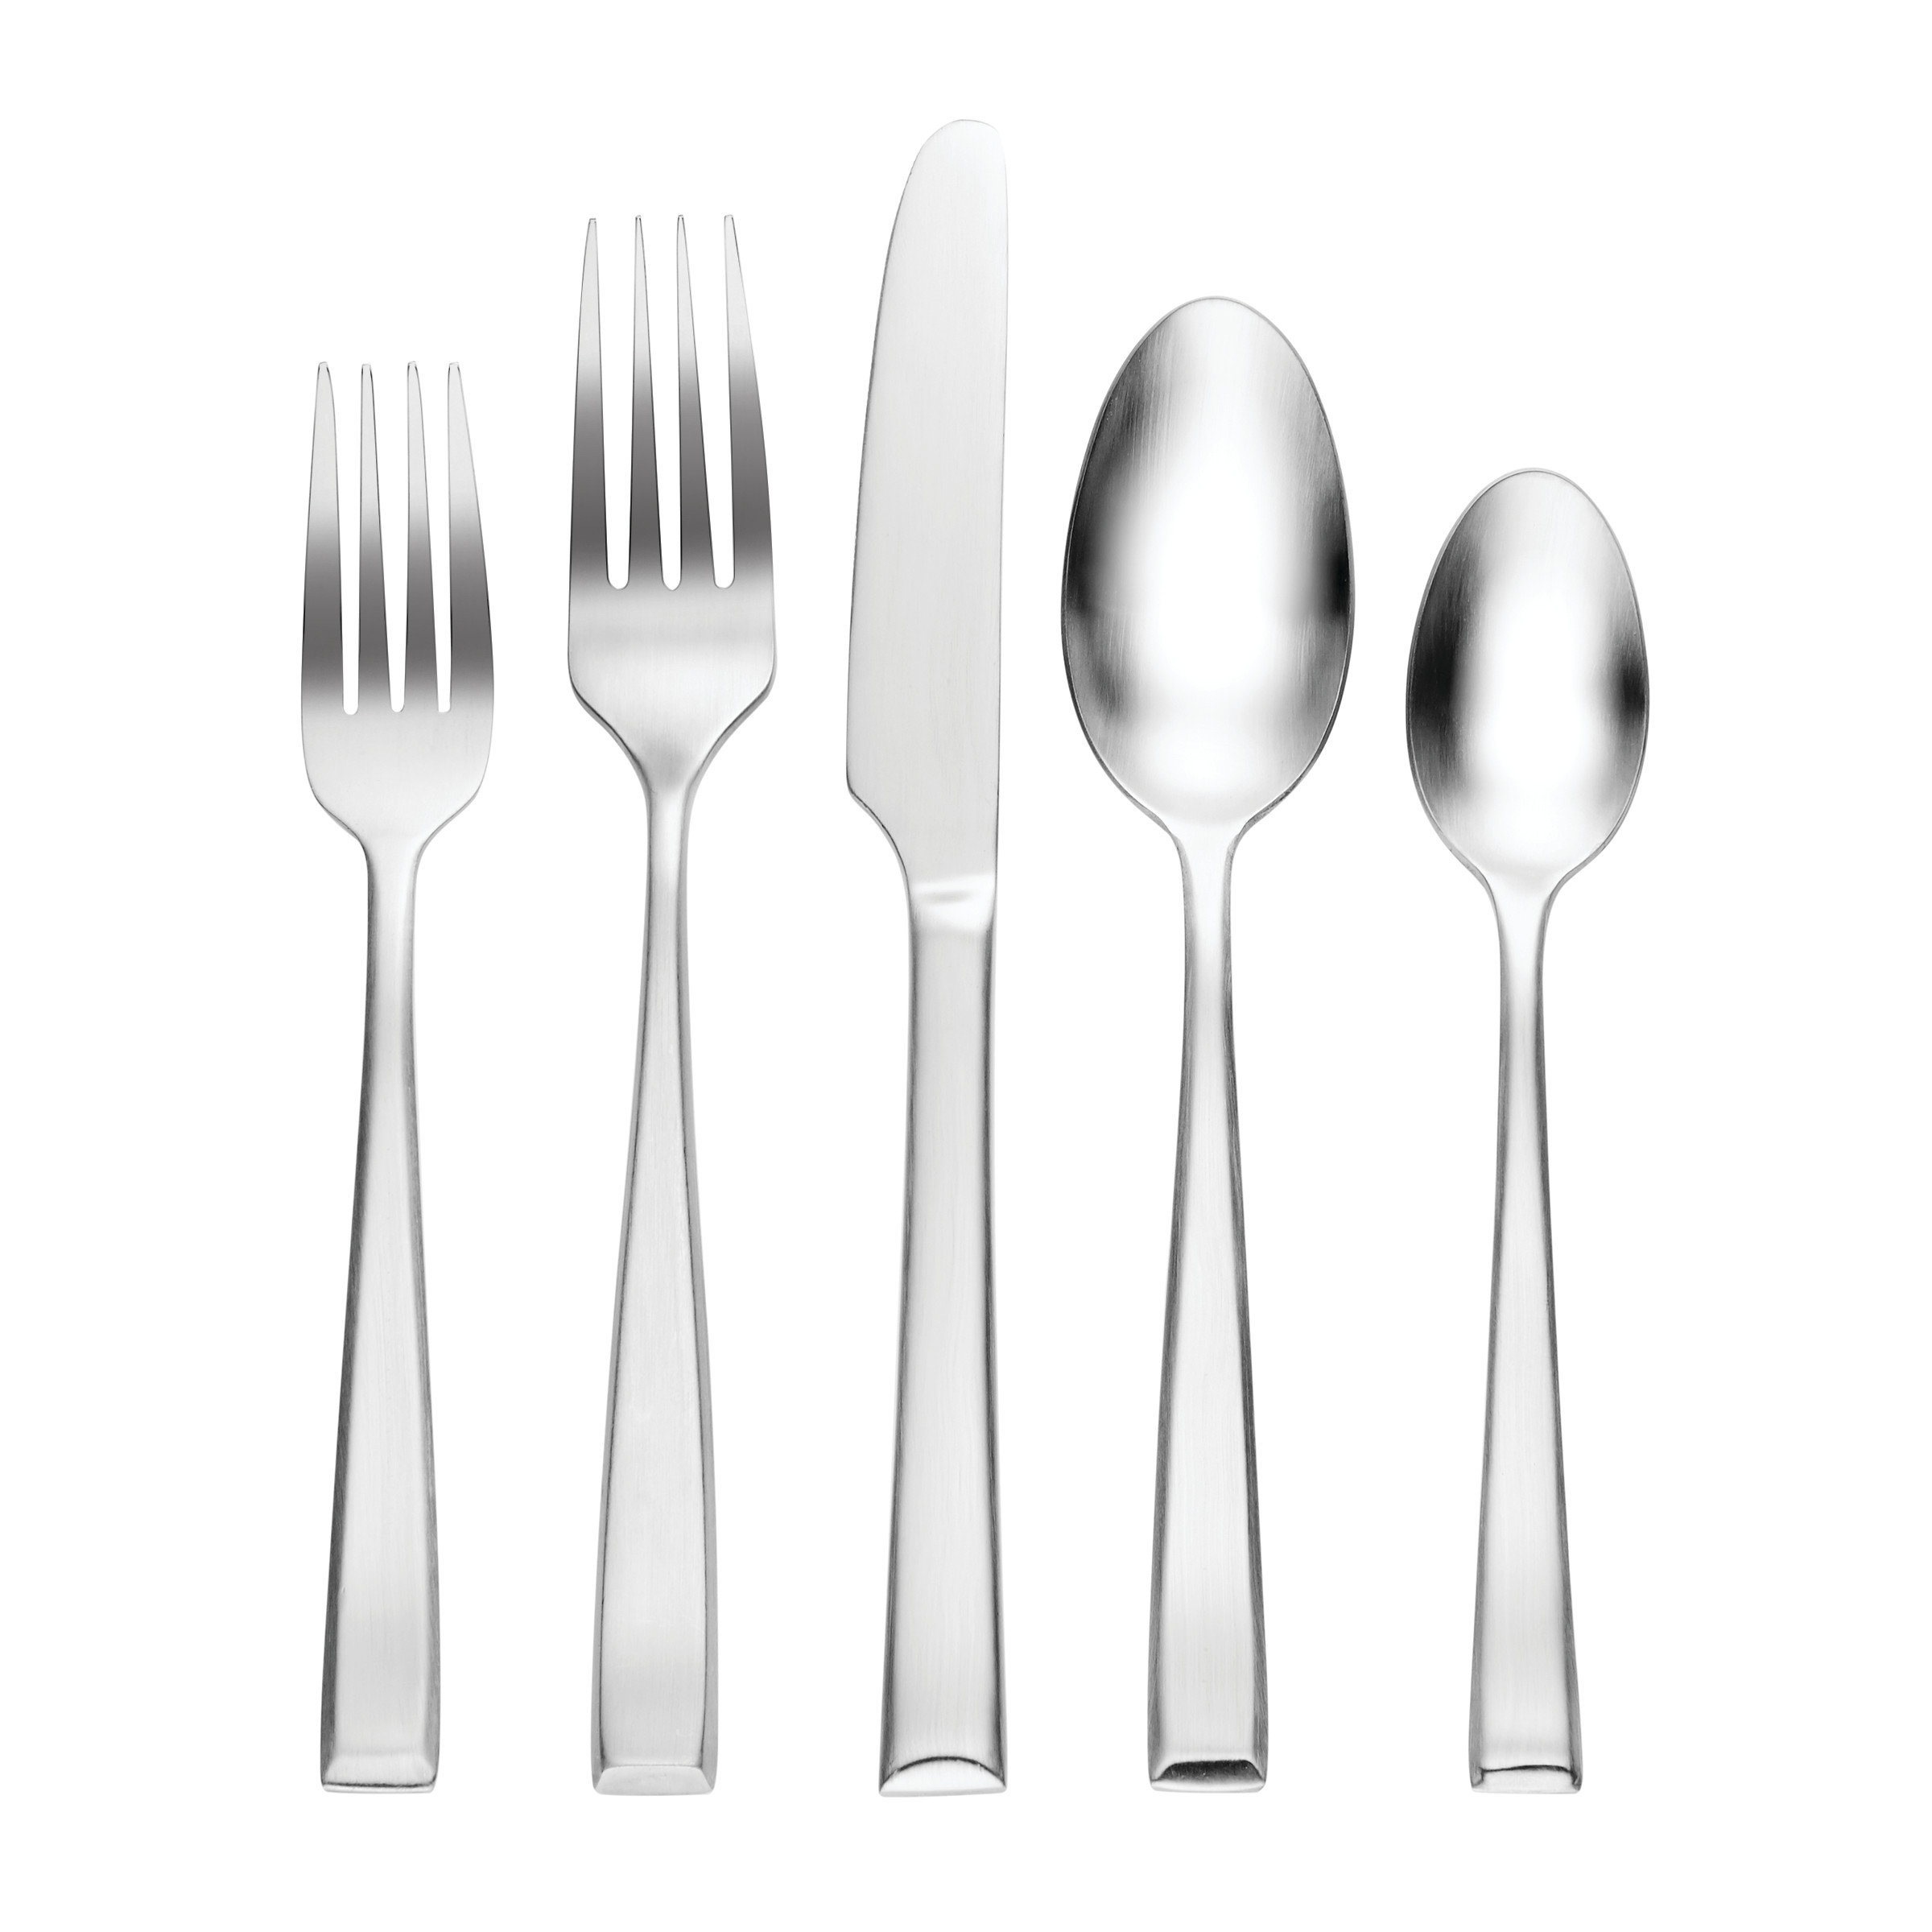 Silverware Set, Evolution TODAYSHOME 20 Piece Stainless Steel Flatware, Service for 4 Cutlery Set Utensils, for Home Kitchen Restaurant, Include